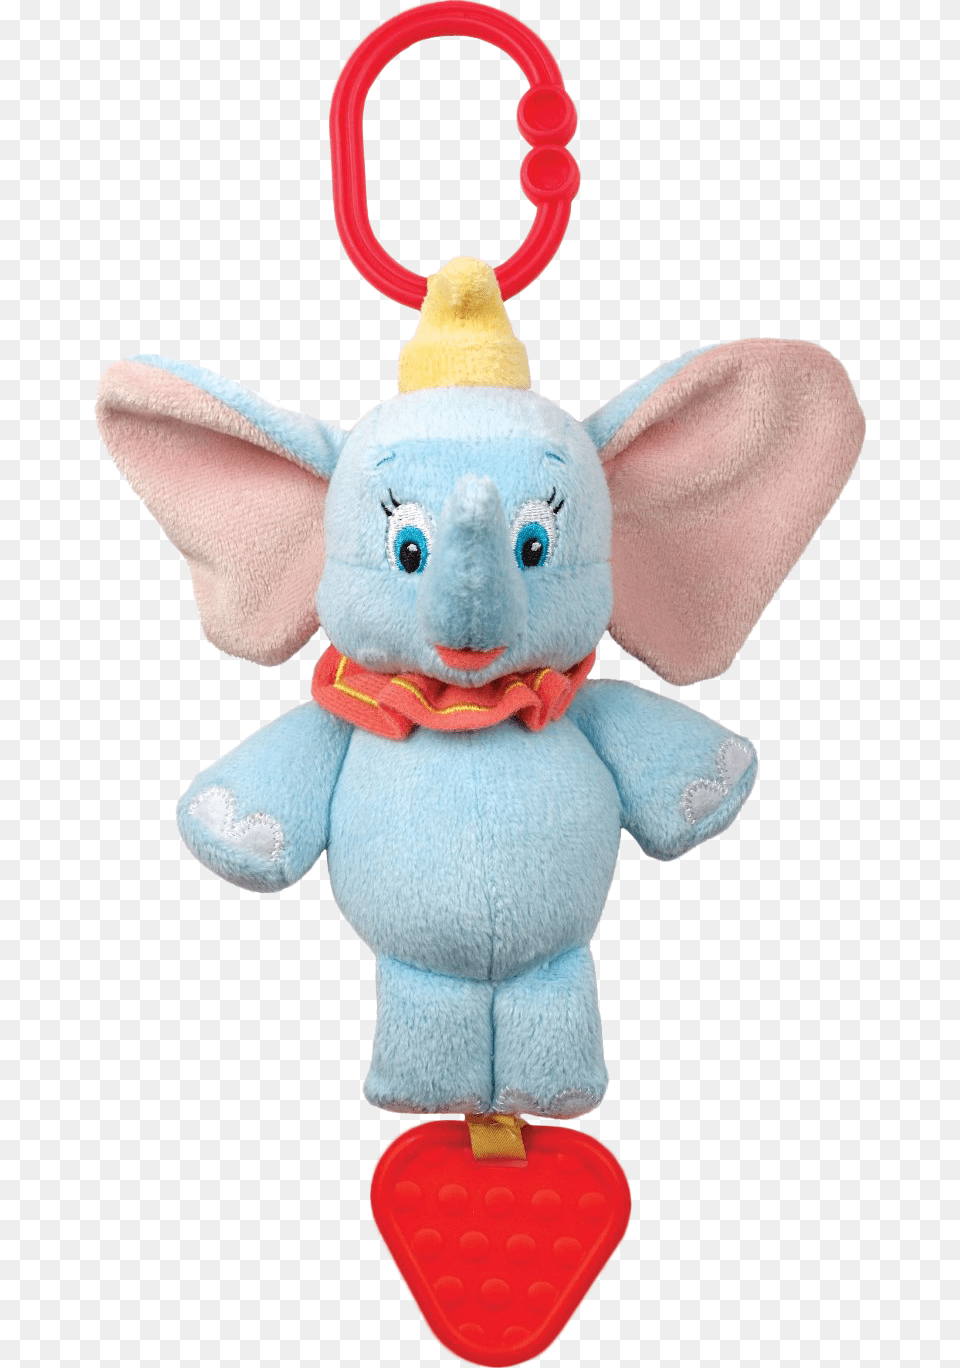 Dumbo On The Go Disney Dumbo Baby Toy, Plush, Rattle Free Png